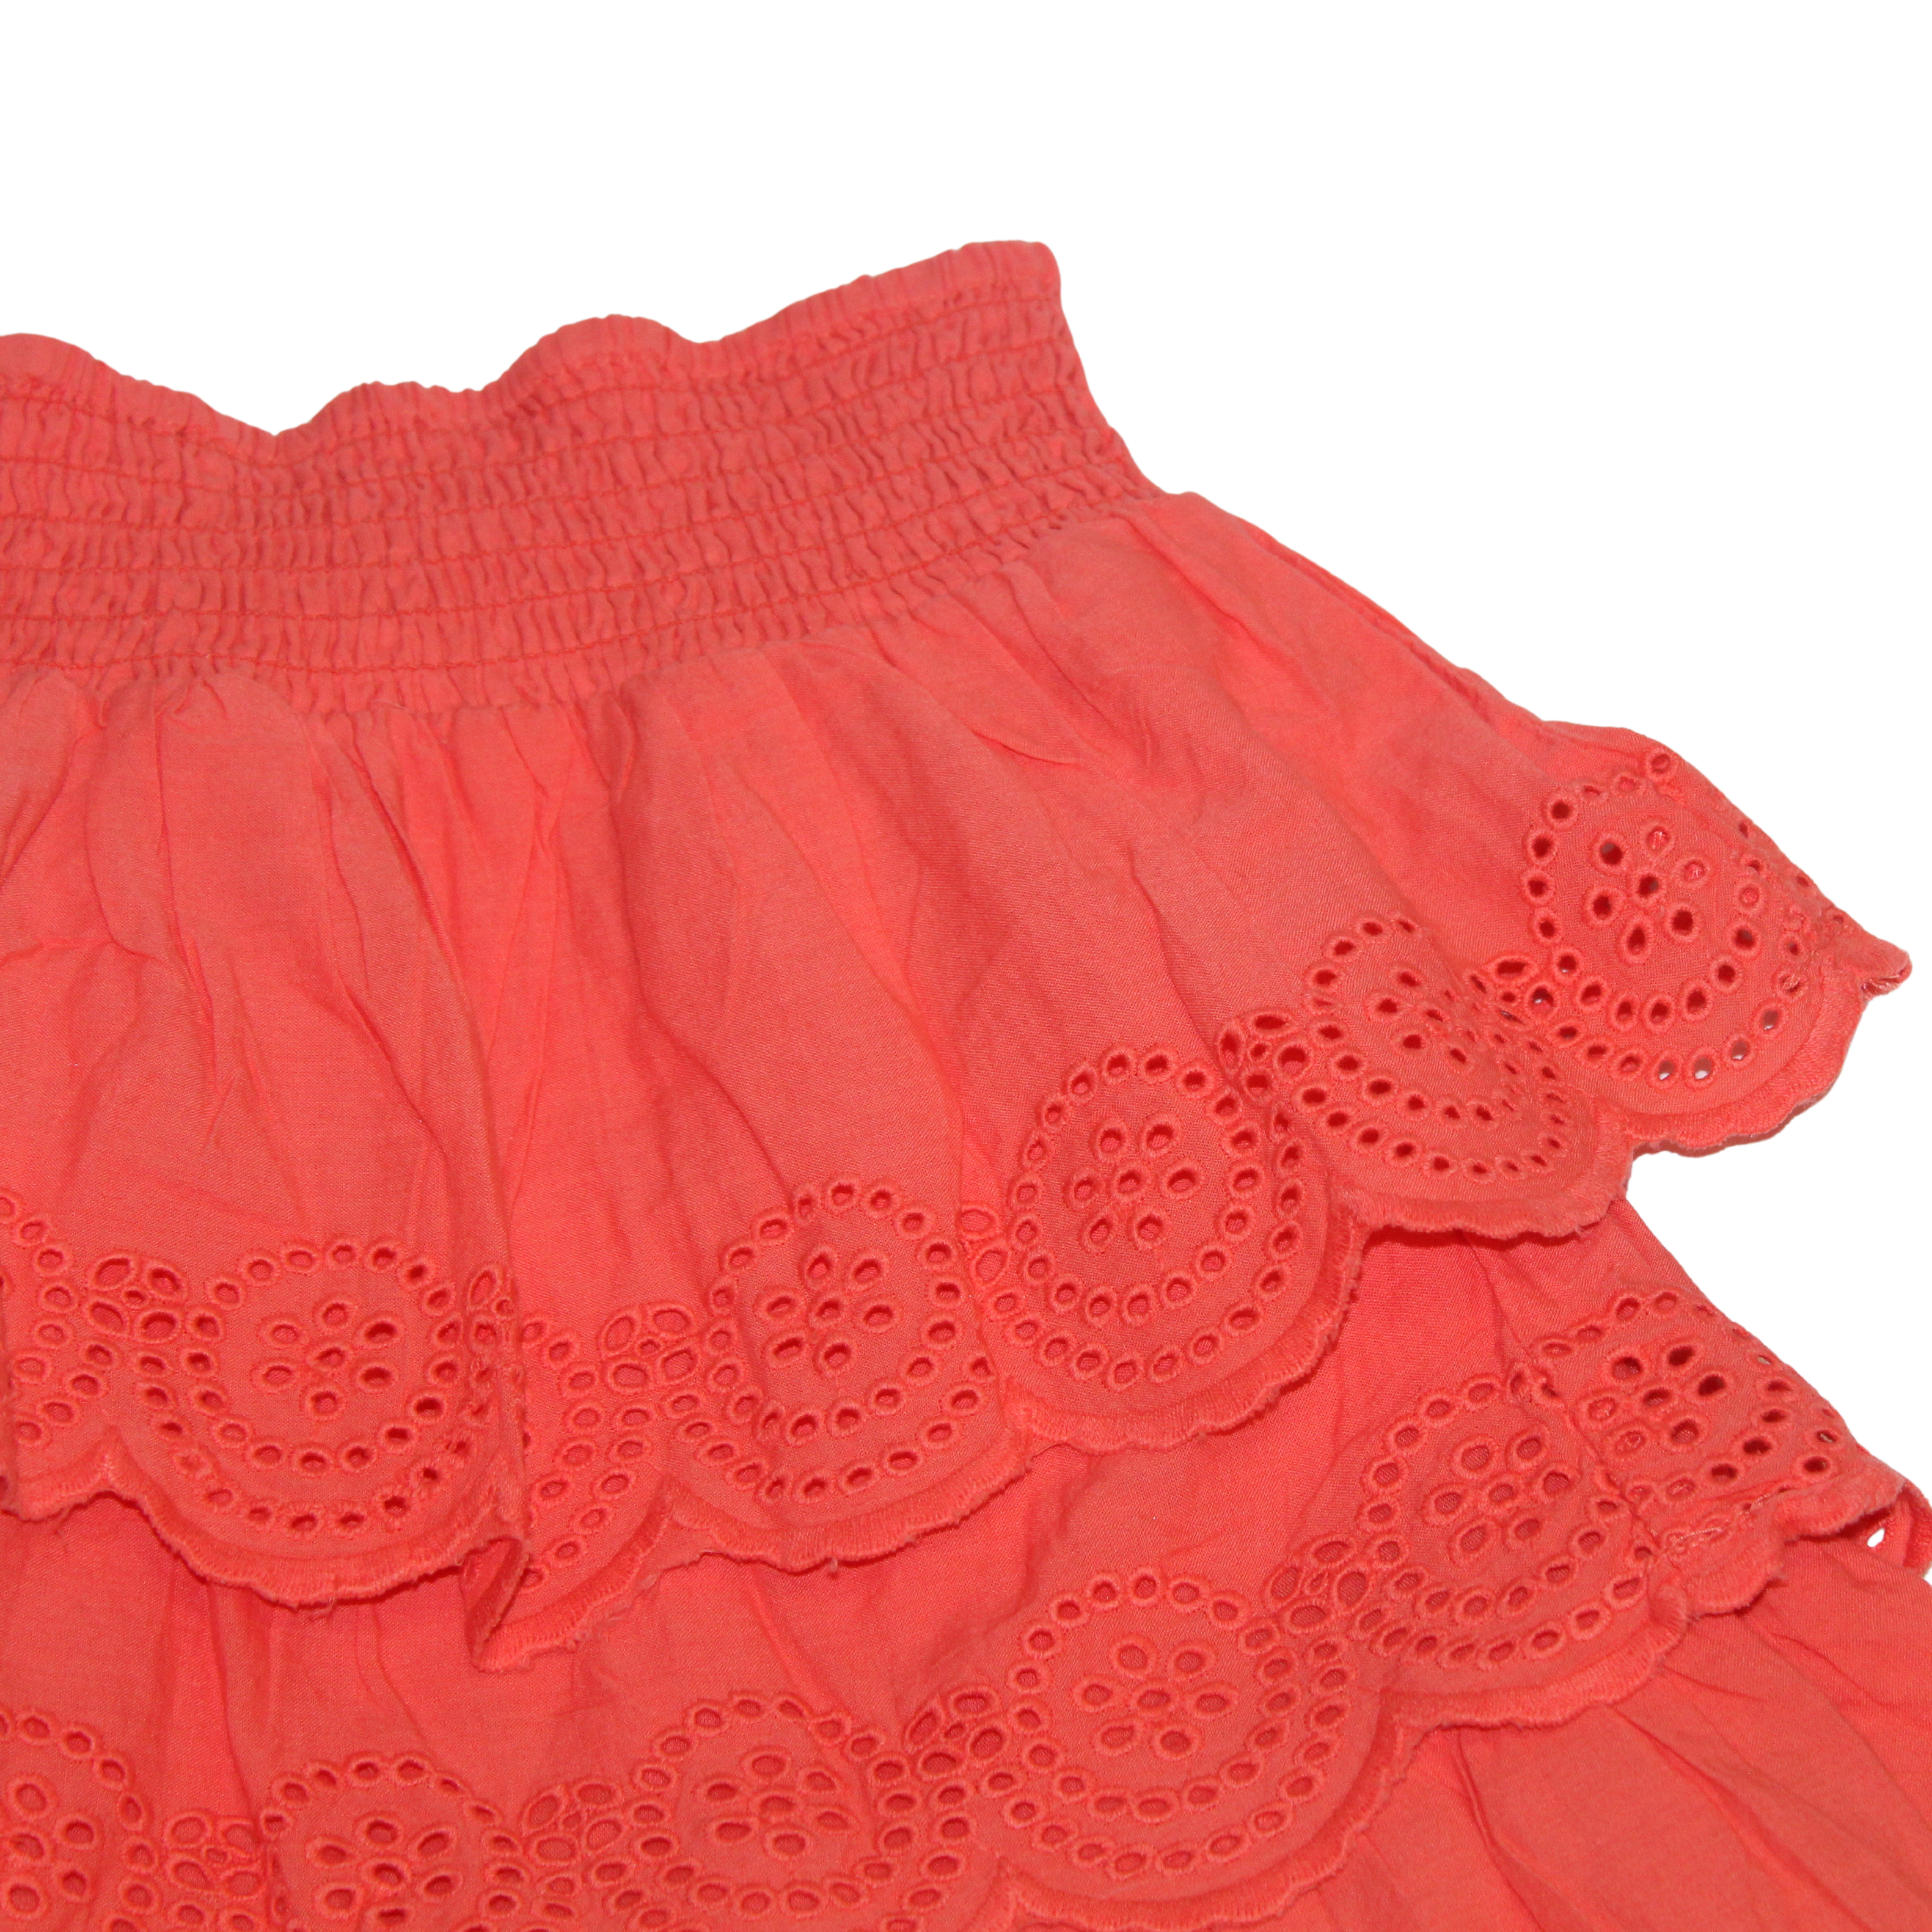 Coral Skirt